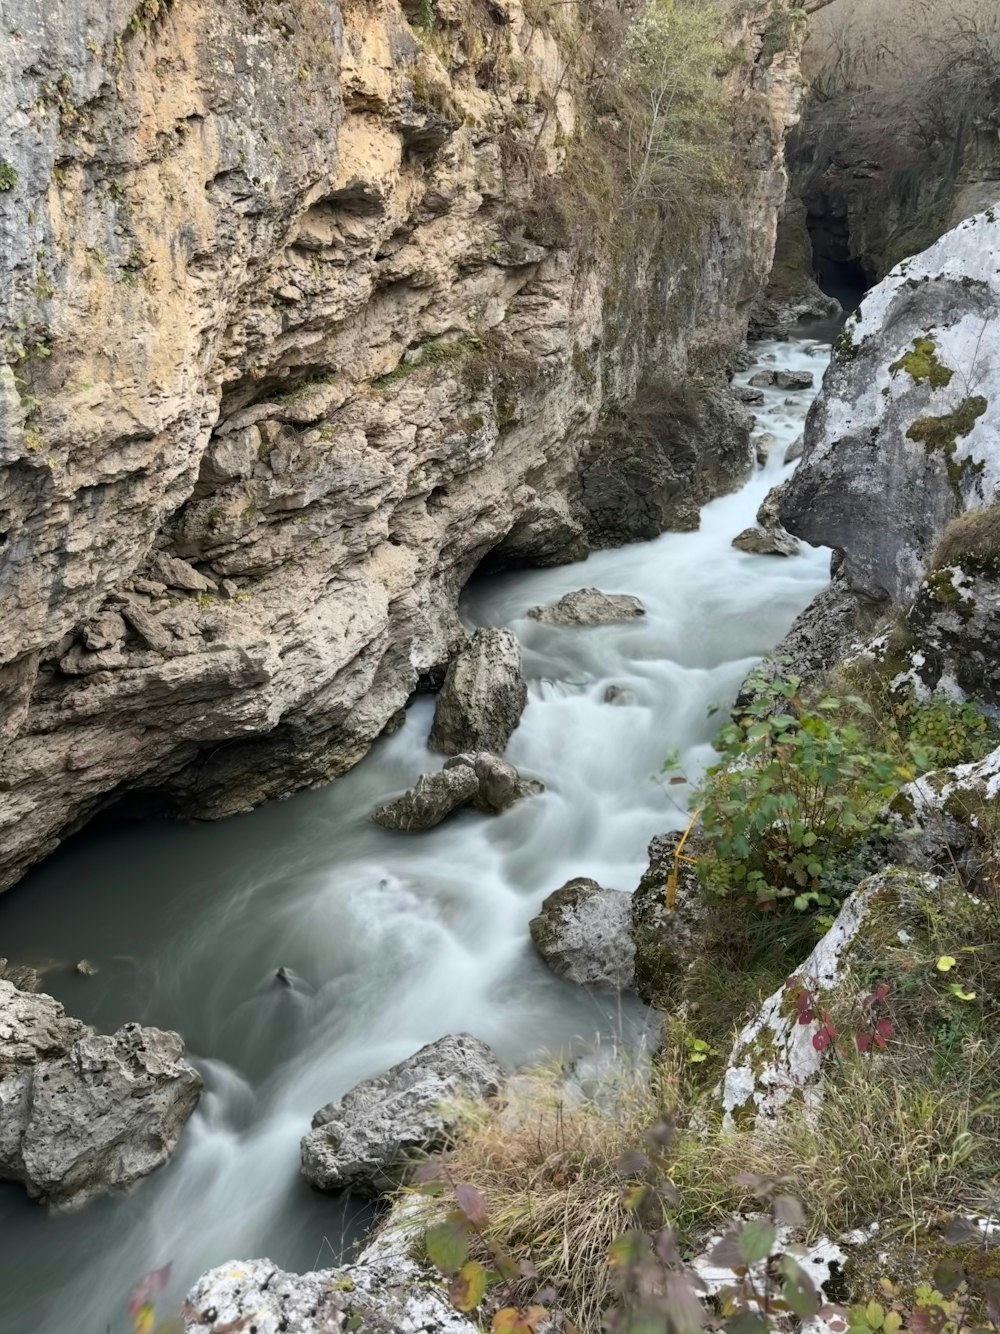 a river flowing through a canyon next to a rocky cliff